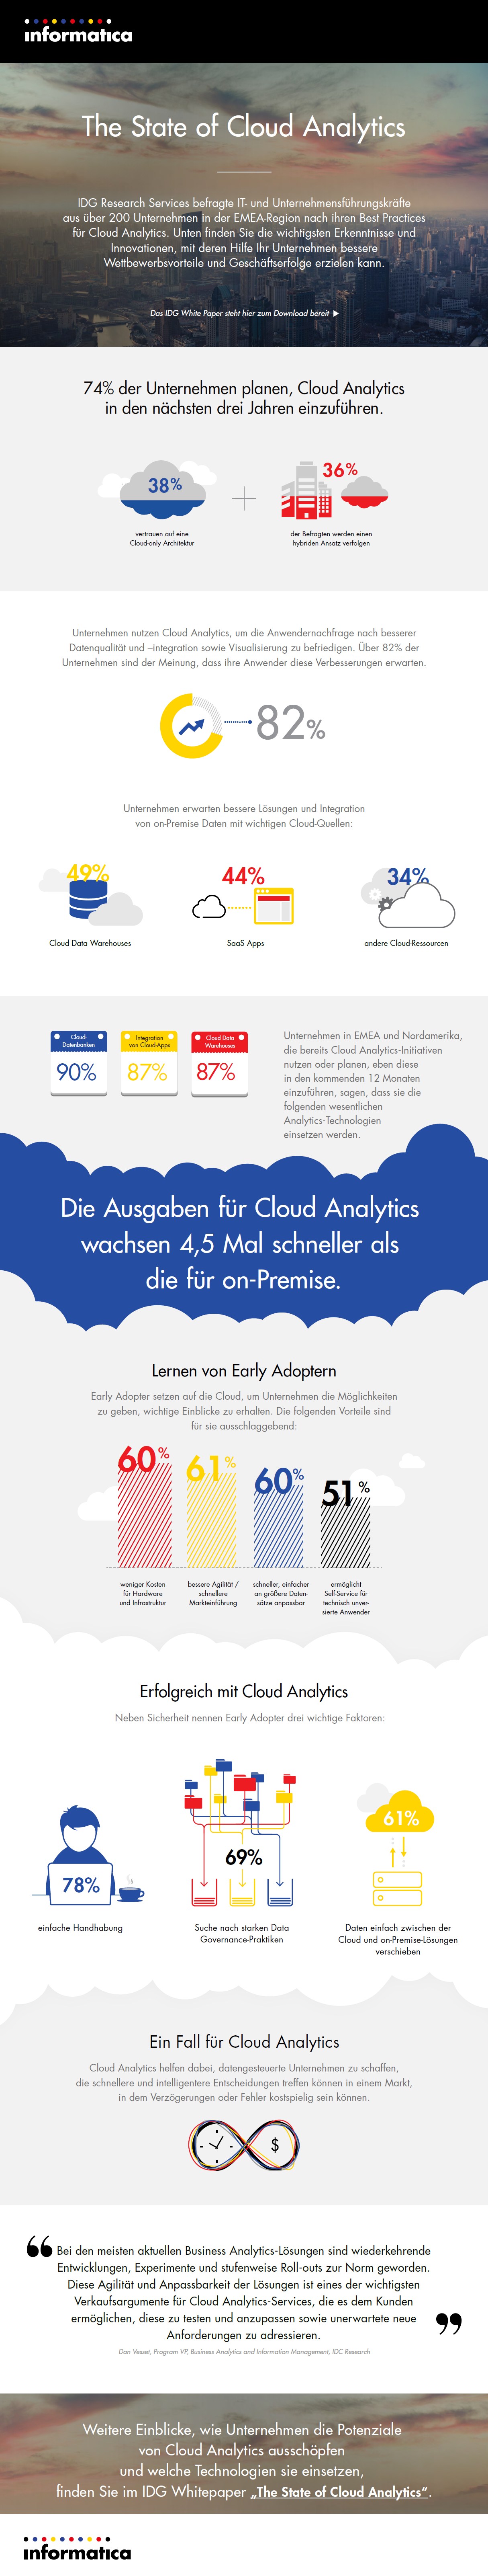 infografik informatica cloud analytics